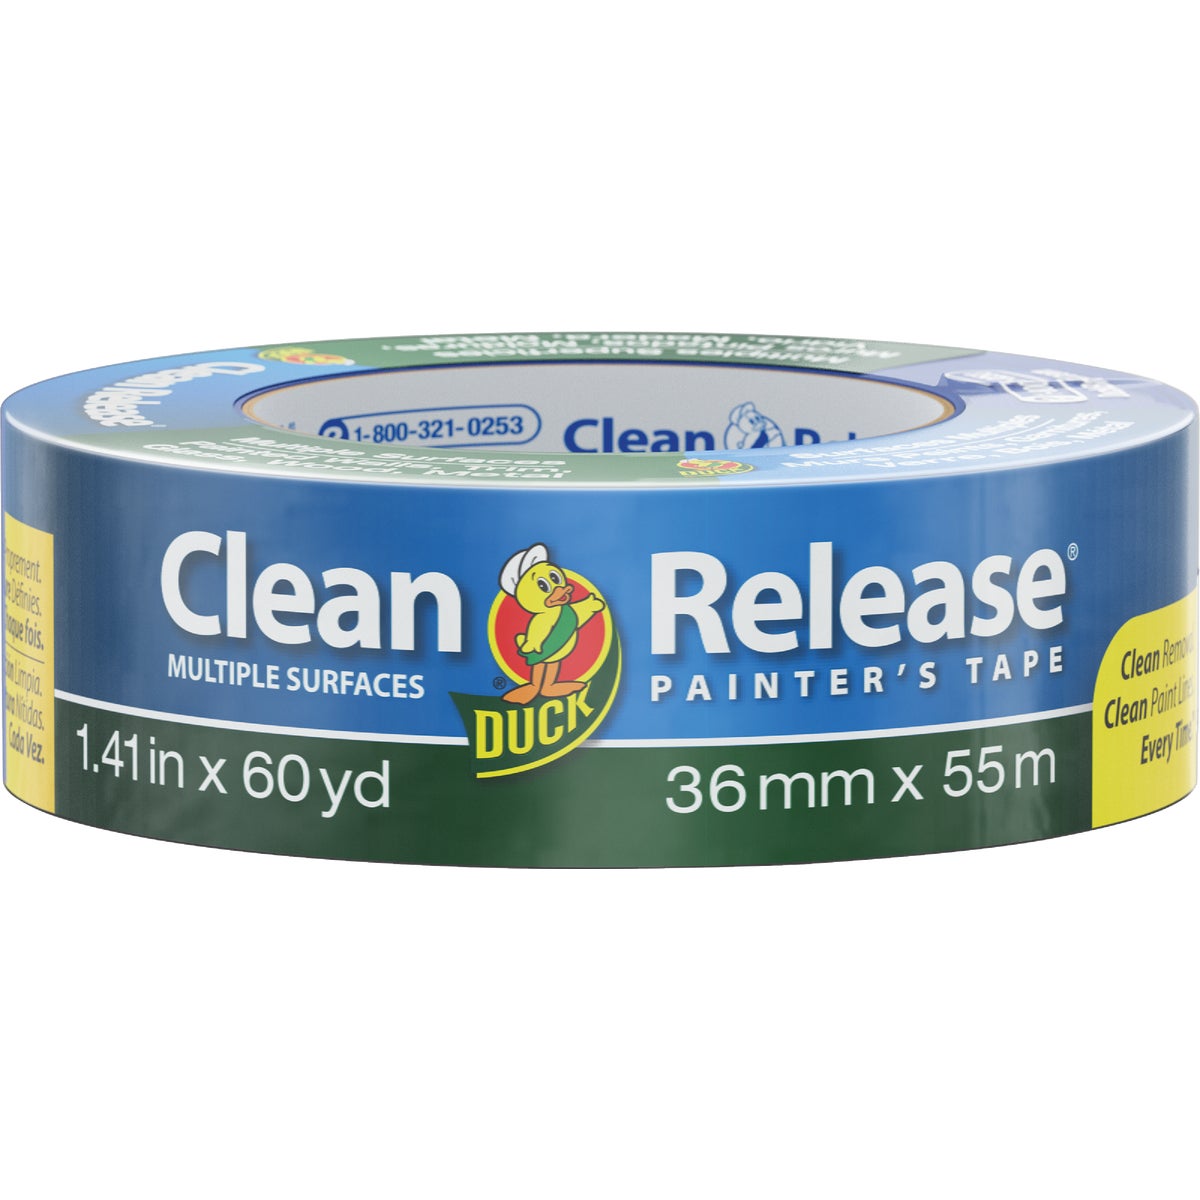 Duck Clean Release 1.41 In. x 60 Yd. Blue Painters Tape